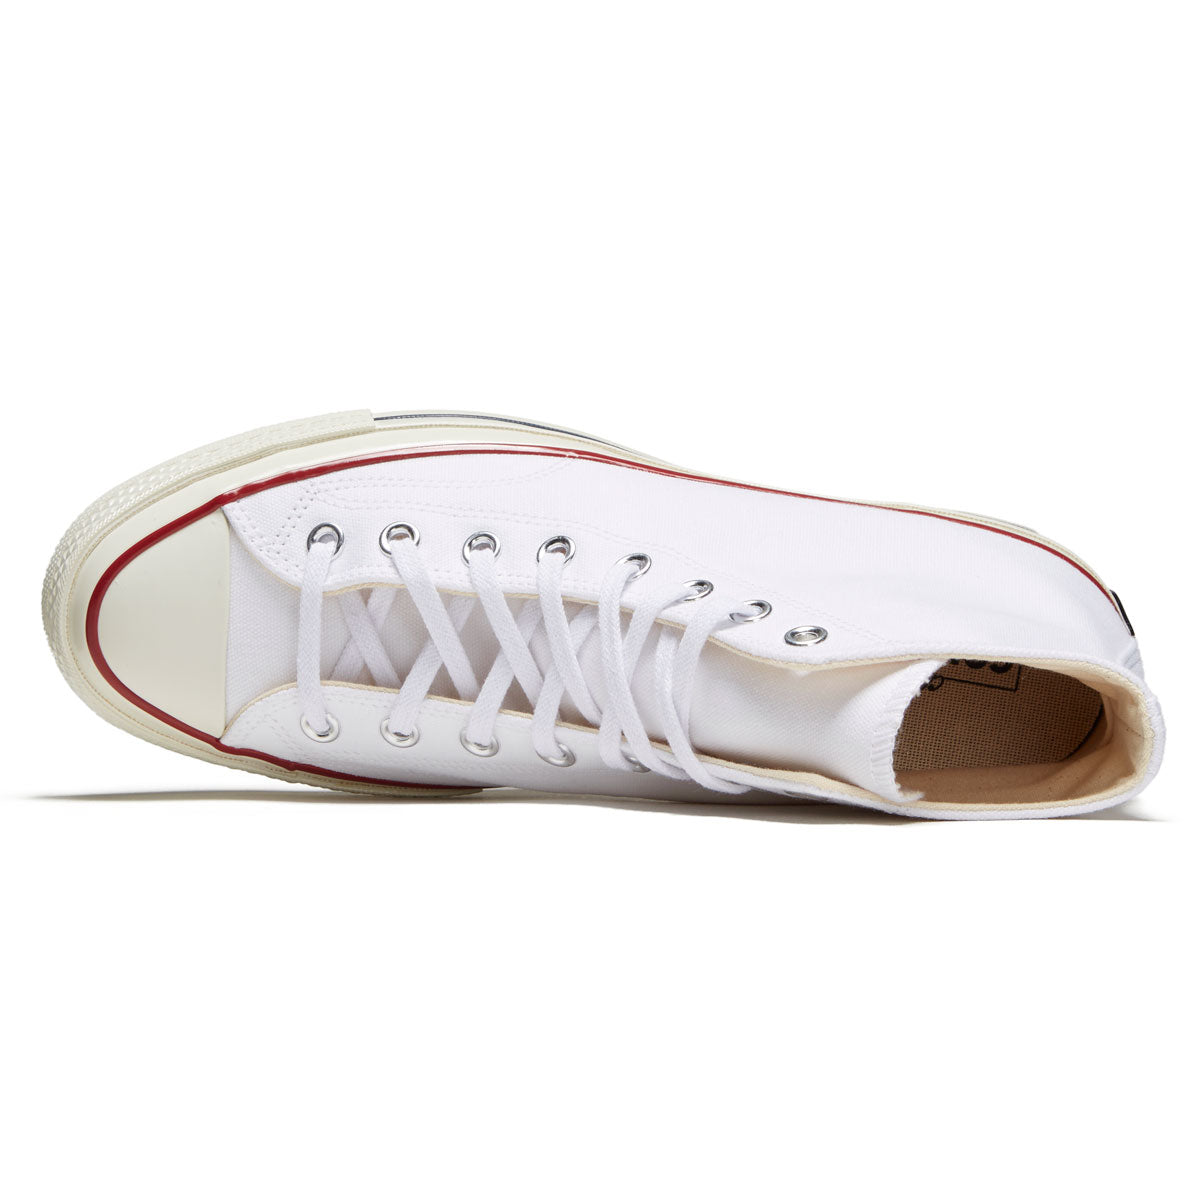 Converse Chuck 70 Hi Shoes - White/Garnet/Egret image 3